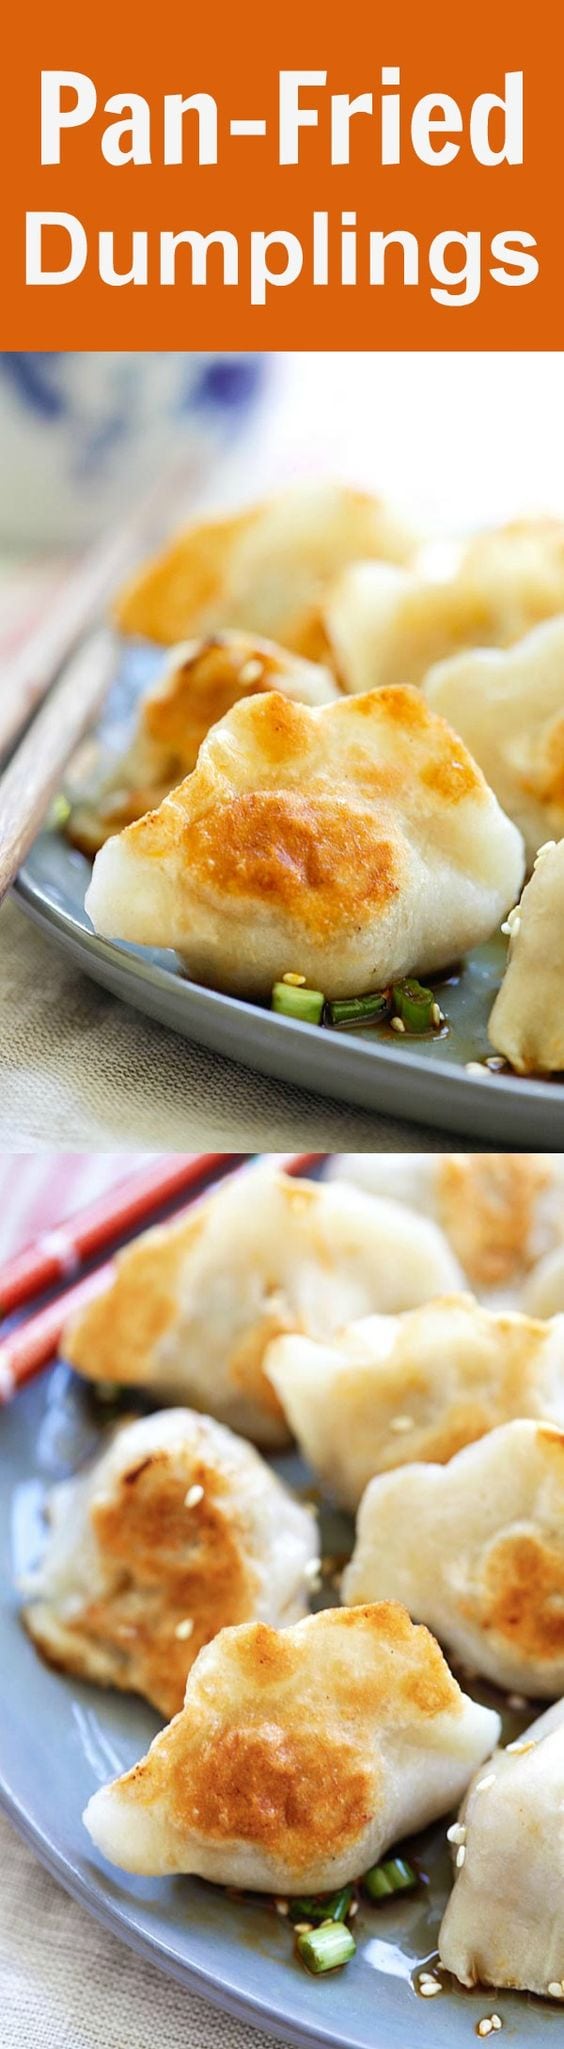 Pan-fried Dumplings - BEST dumplings recipe you'll find online! Juicy, crispy dumplings with meat, veggies and pan-fried to golden perfection | rasamalaysia.com